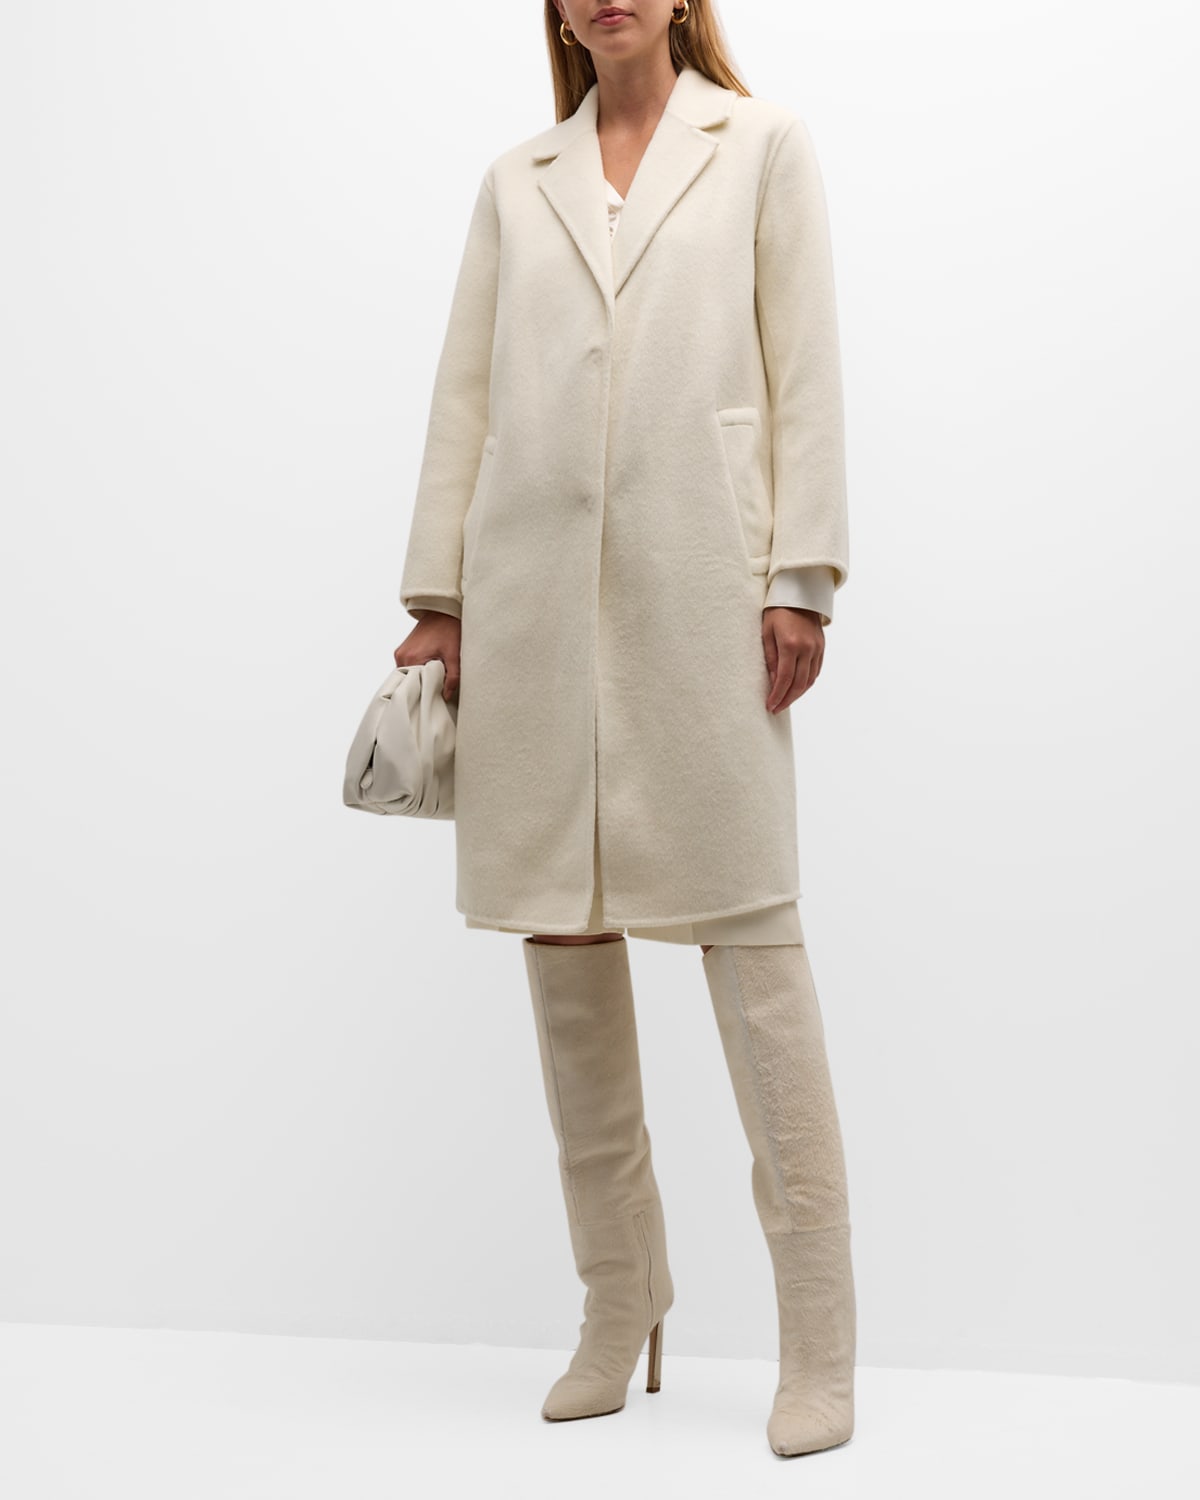  Winter Coats for Women Wool Blend 3/4 Sleeve Mid-Long